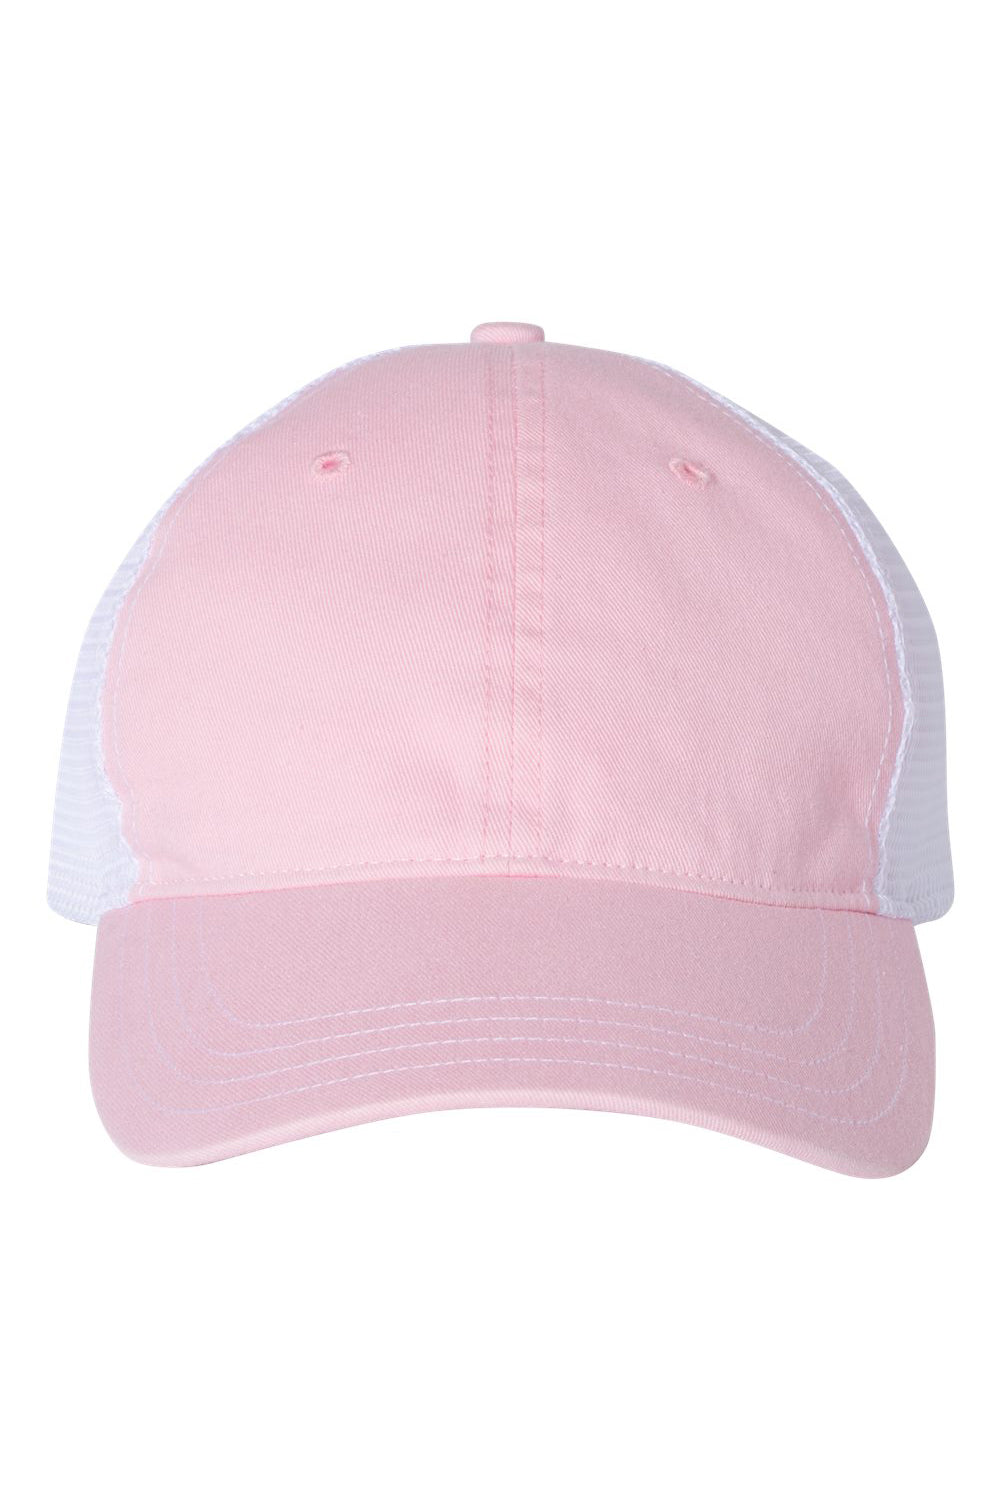 Richardson 111 Mens Garment Washed Trucker Hat Pink/White Flat Front